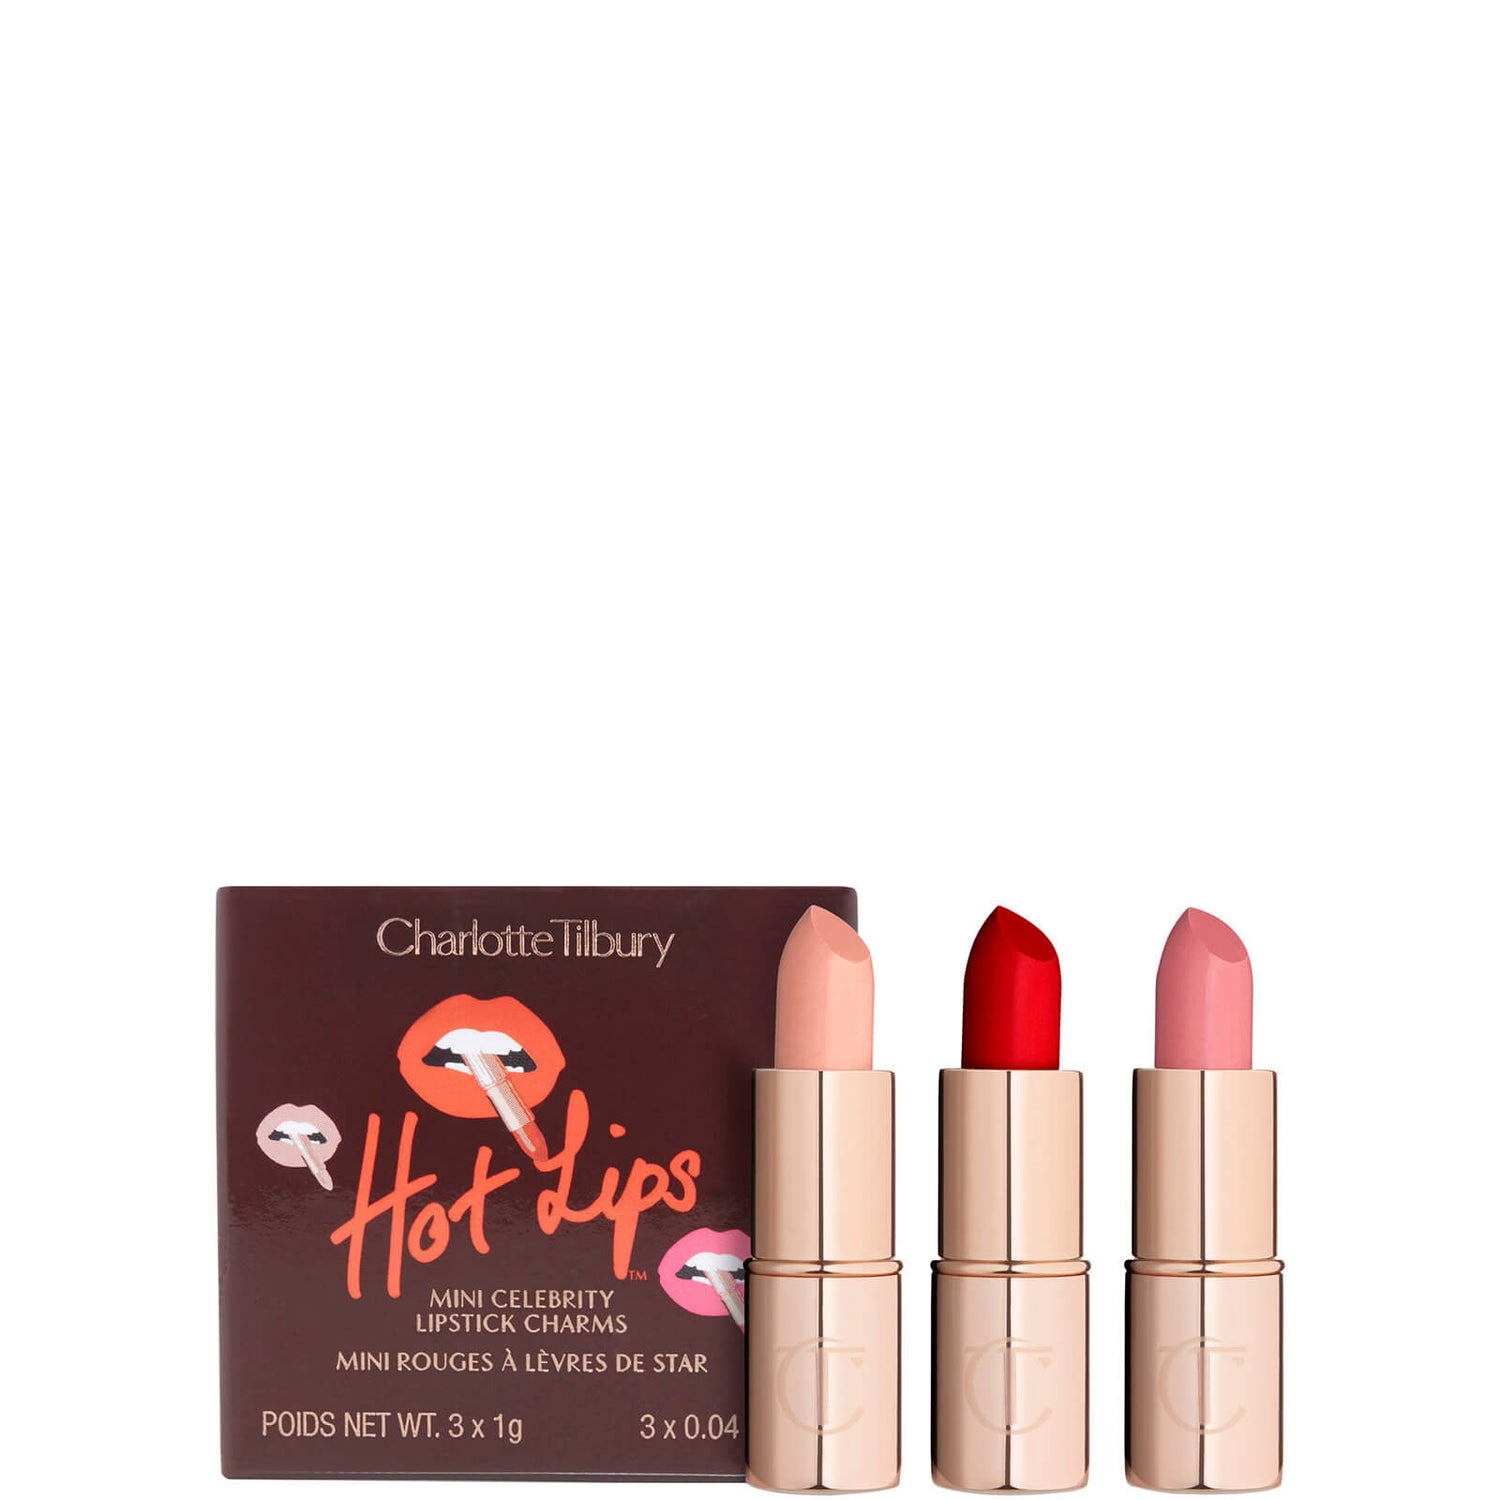 Charlotte Tilbury Hot Lips Mini Celebrity Lipstick Charms